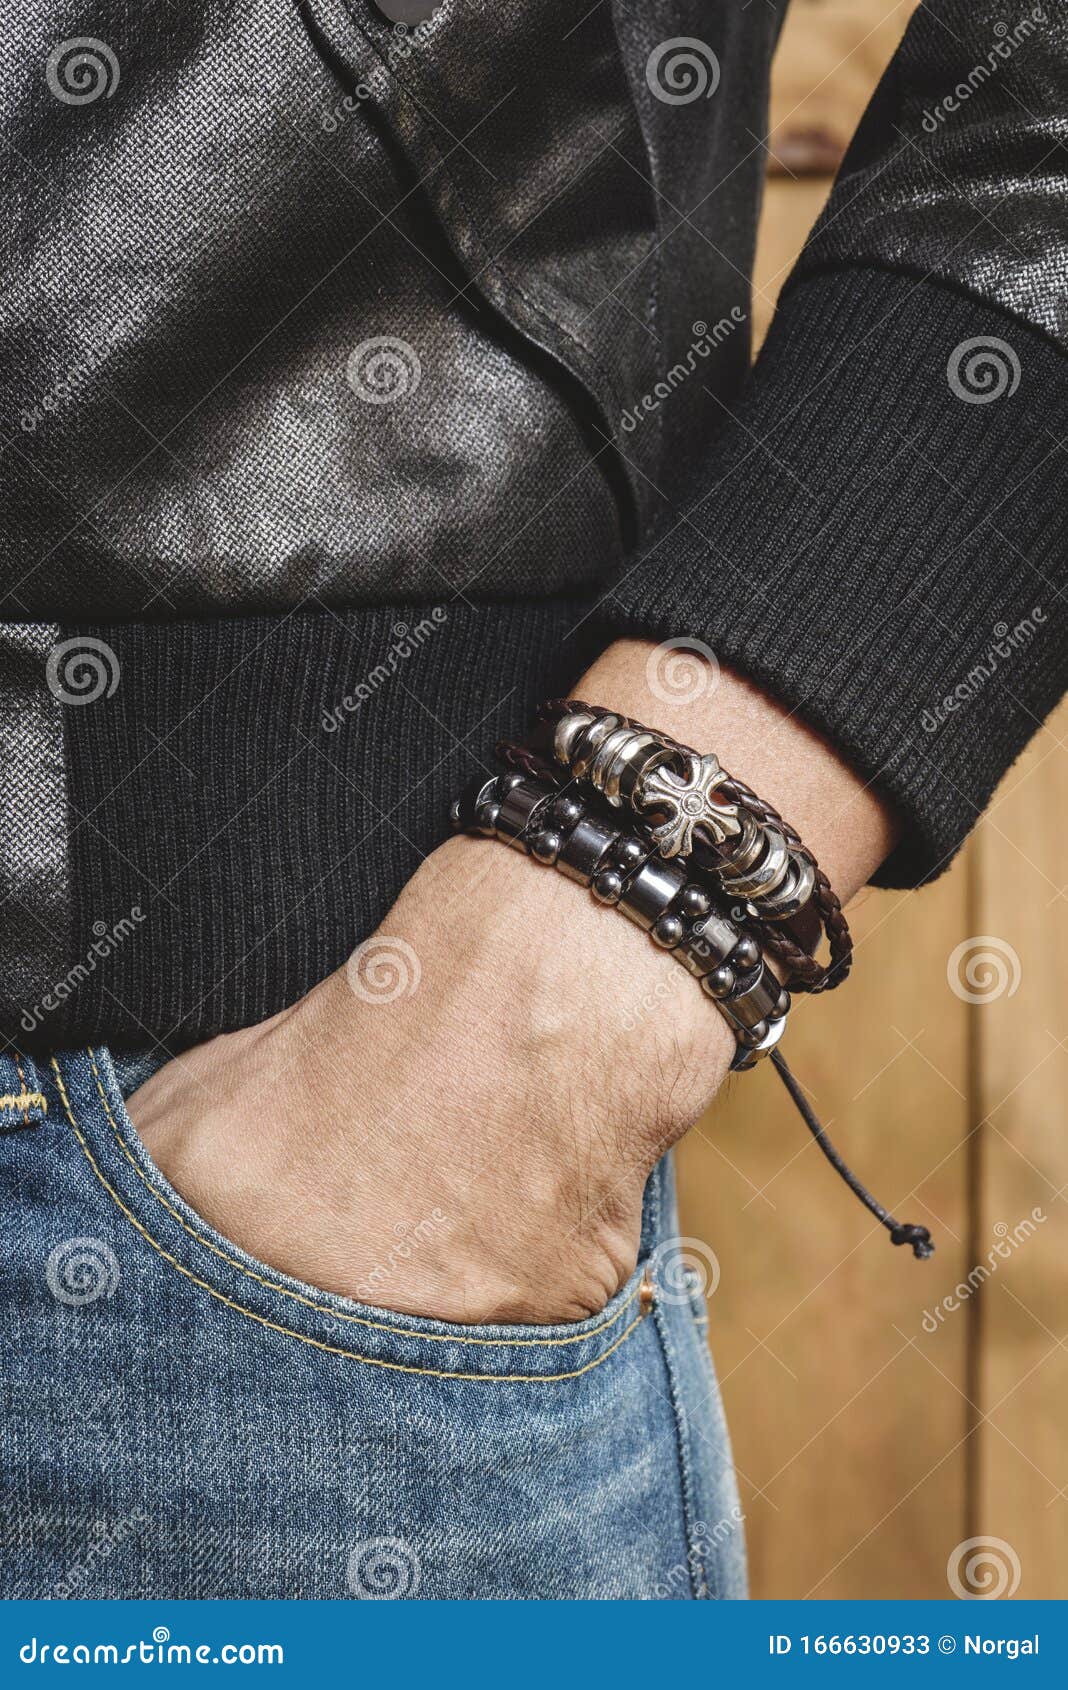 Bracelet on the wrist stock image. Image of object, handmade - 166630933